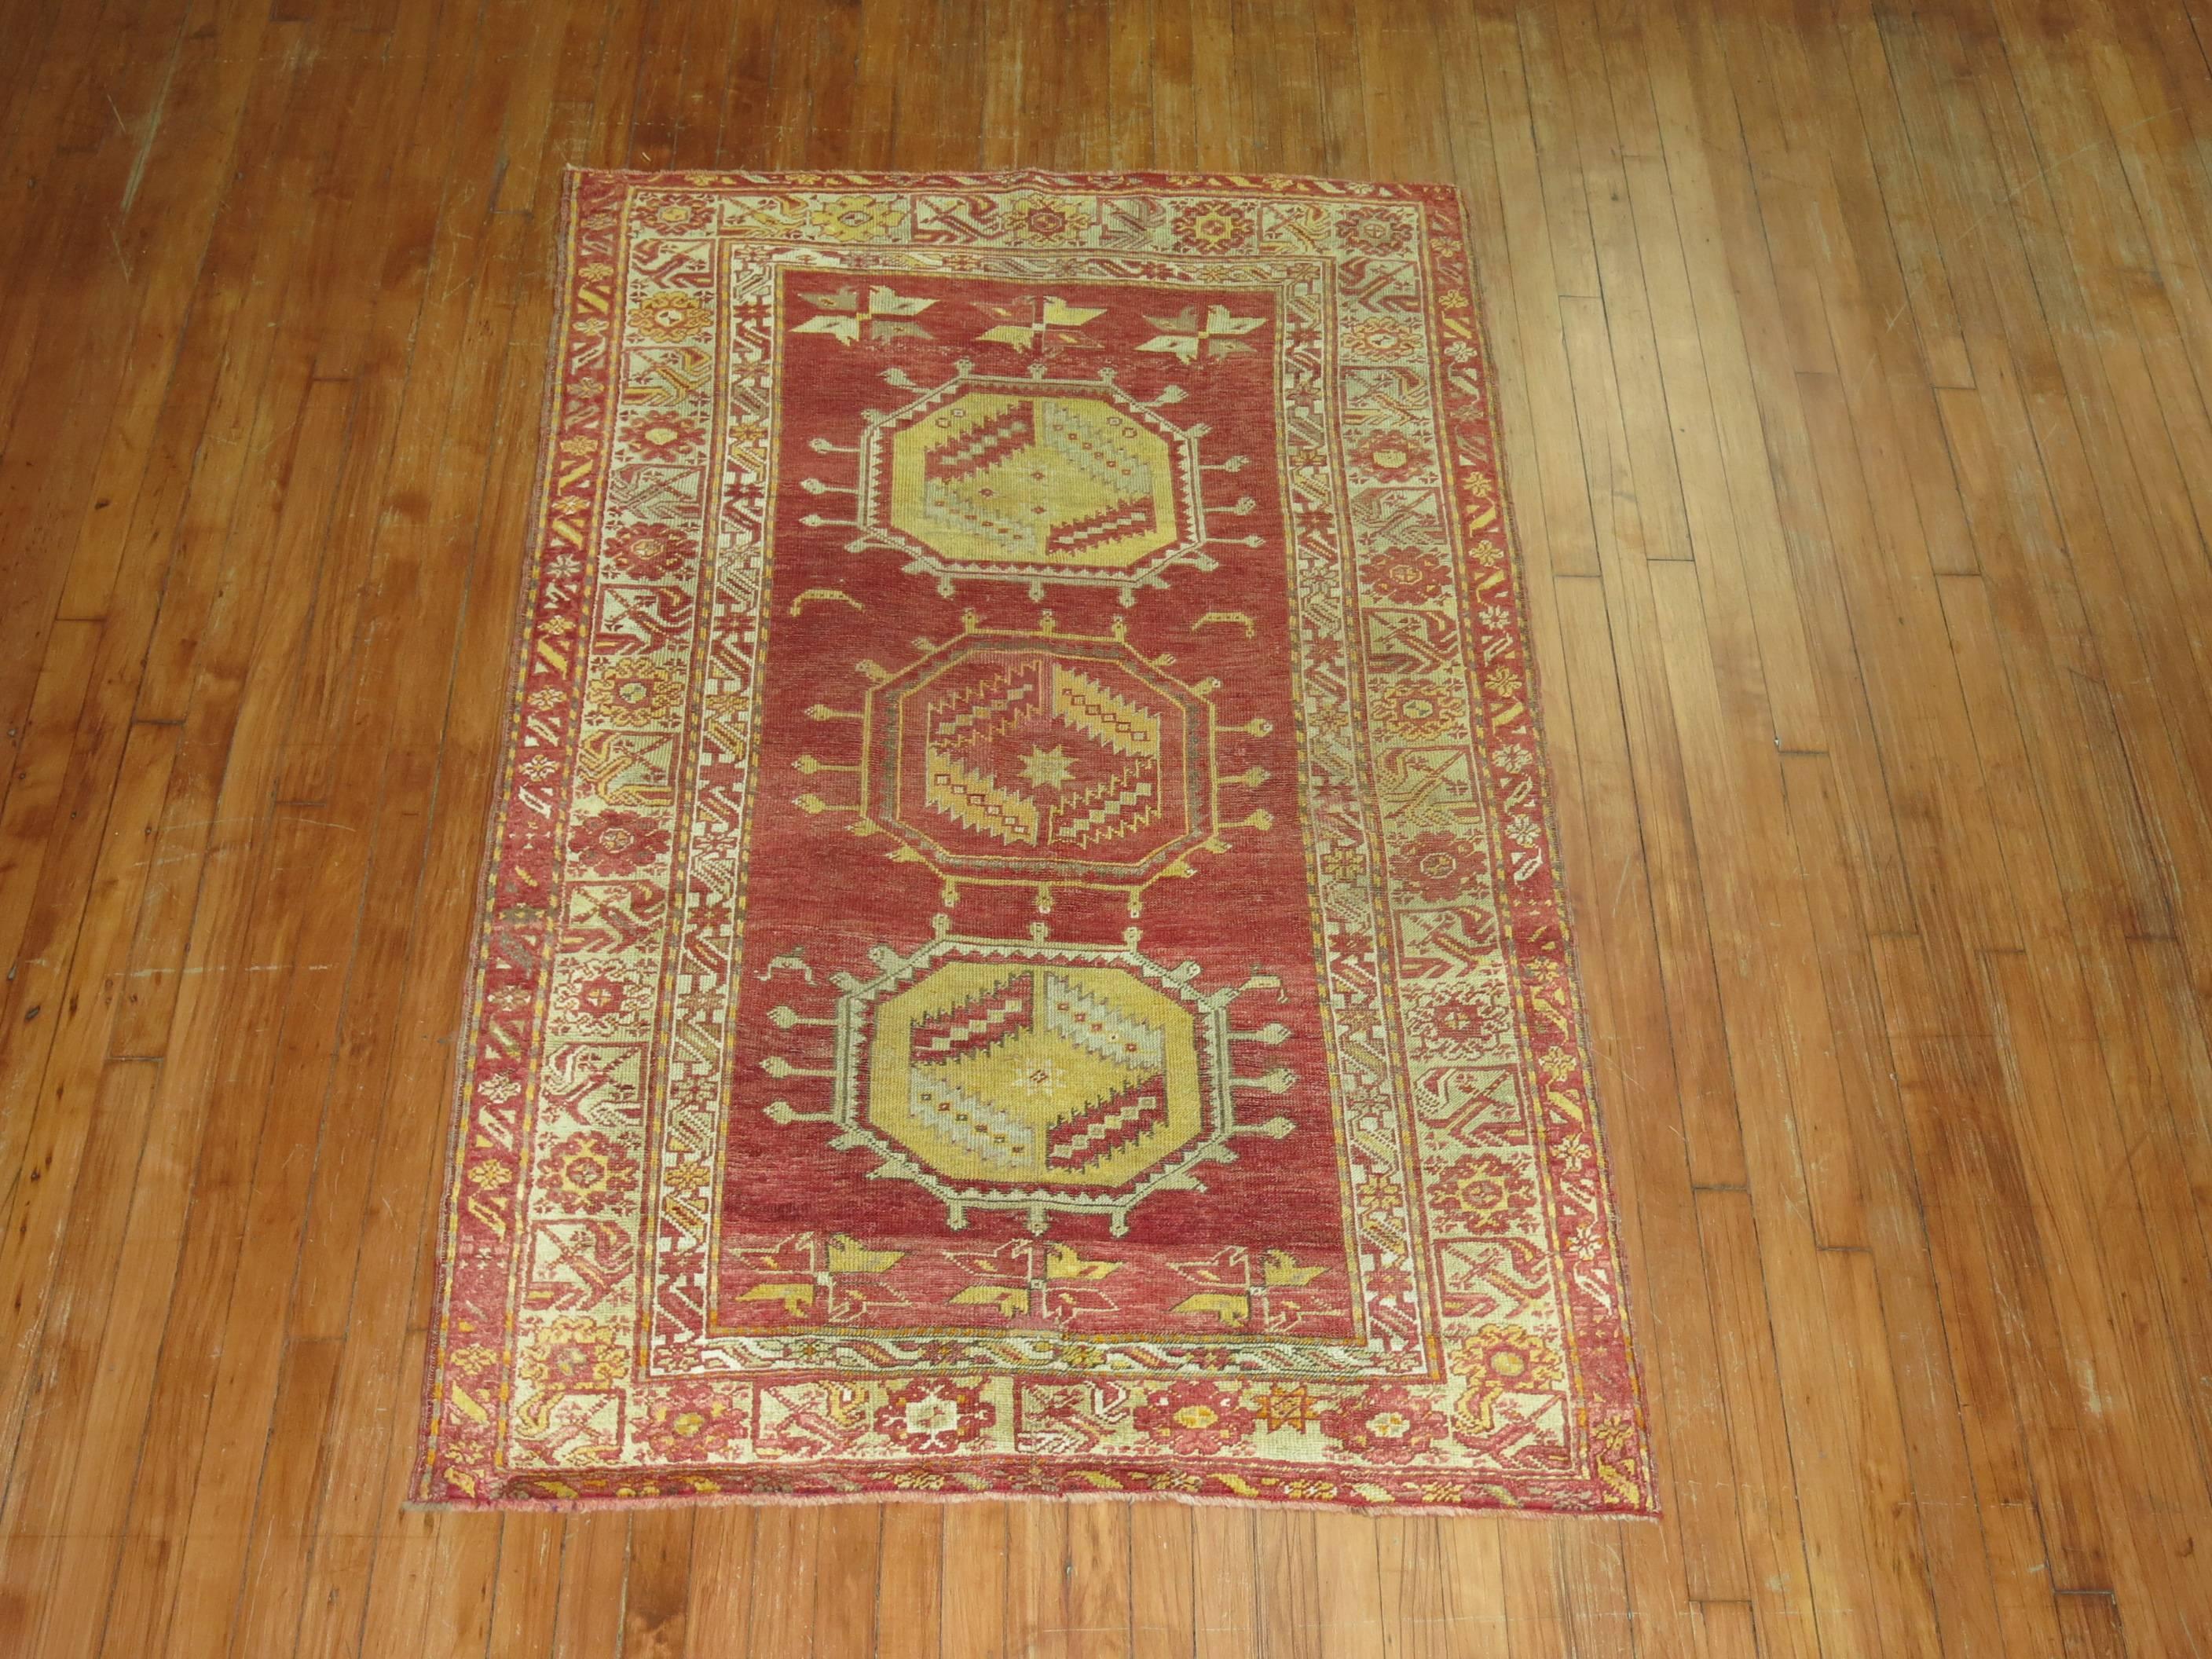 Antique Turkish Sivas rug in reds, brown, blues and mustard.

3'10'' x 6'